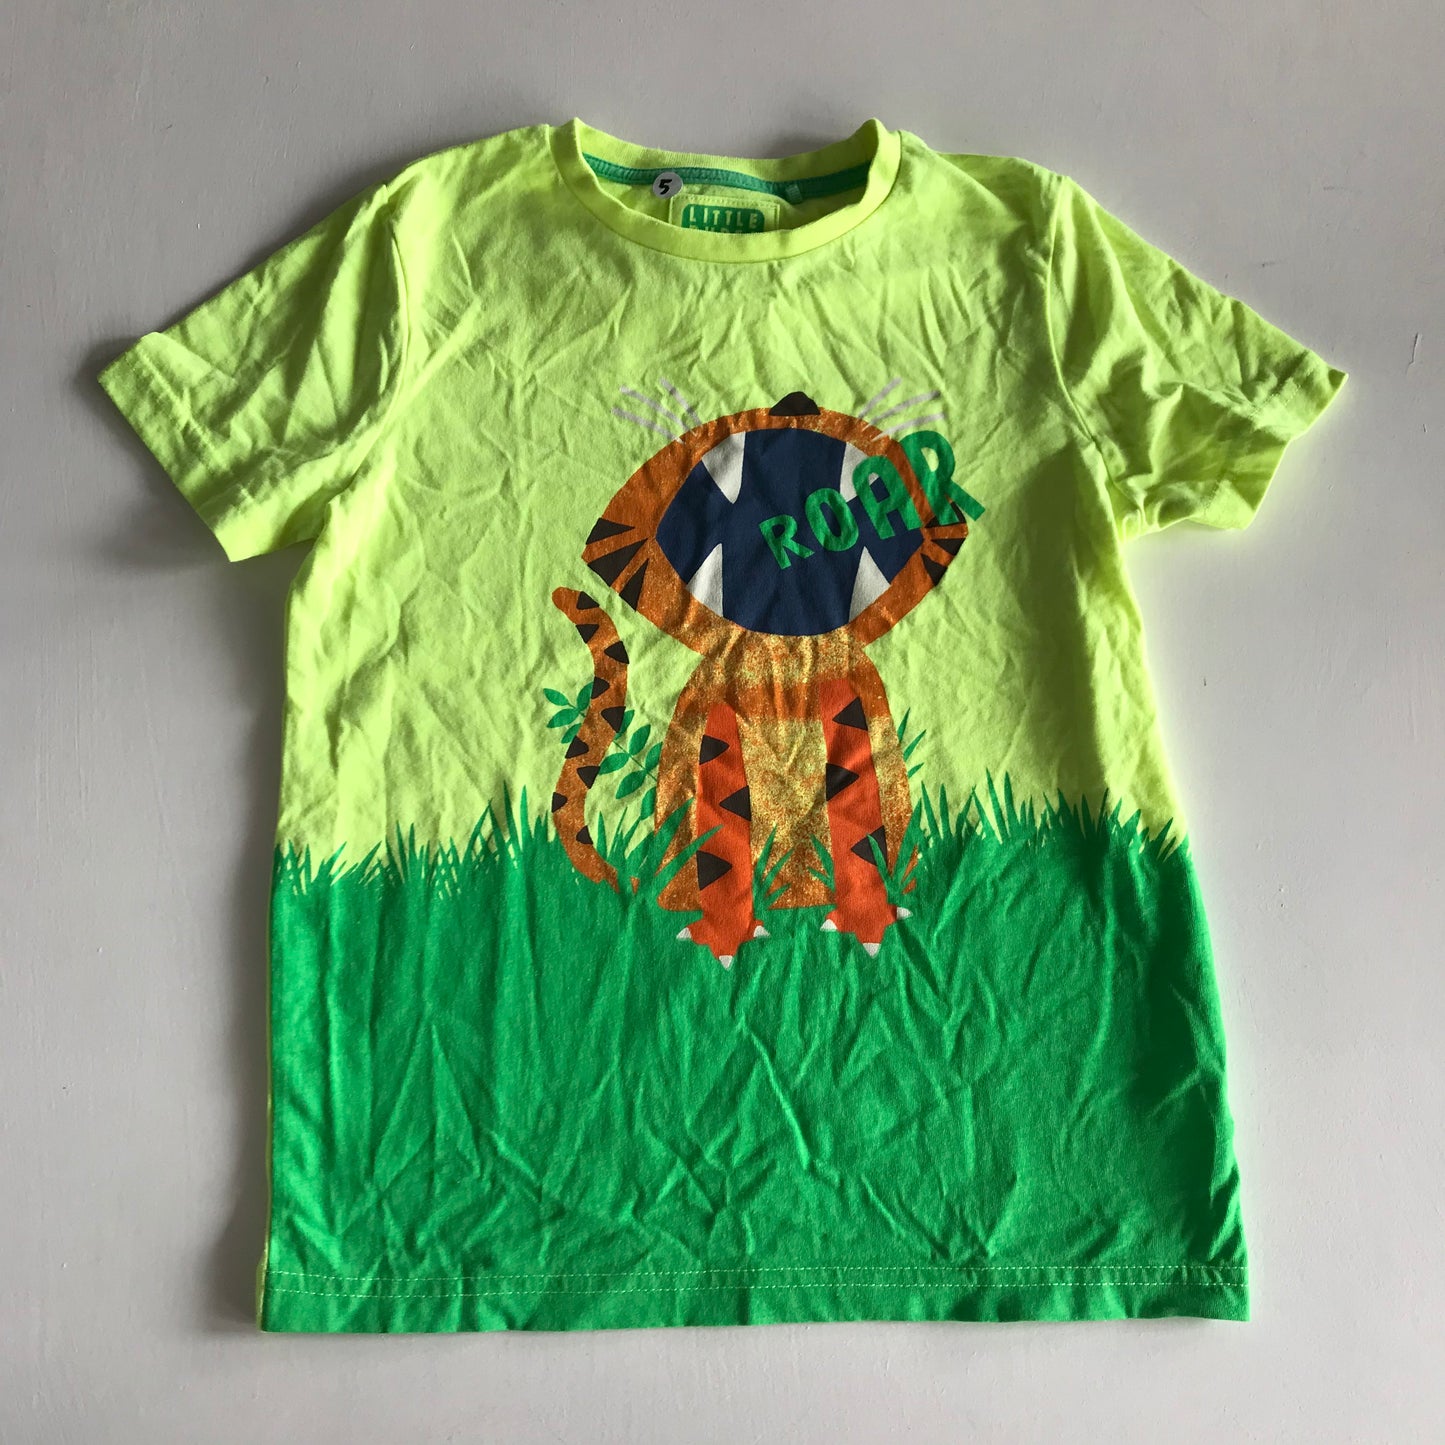 T-shirt - Roaring Tiger  - Age 5